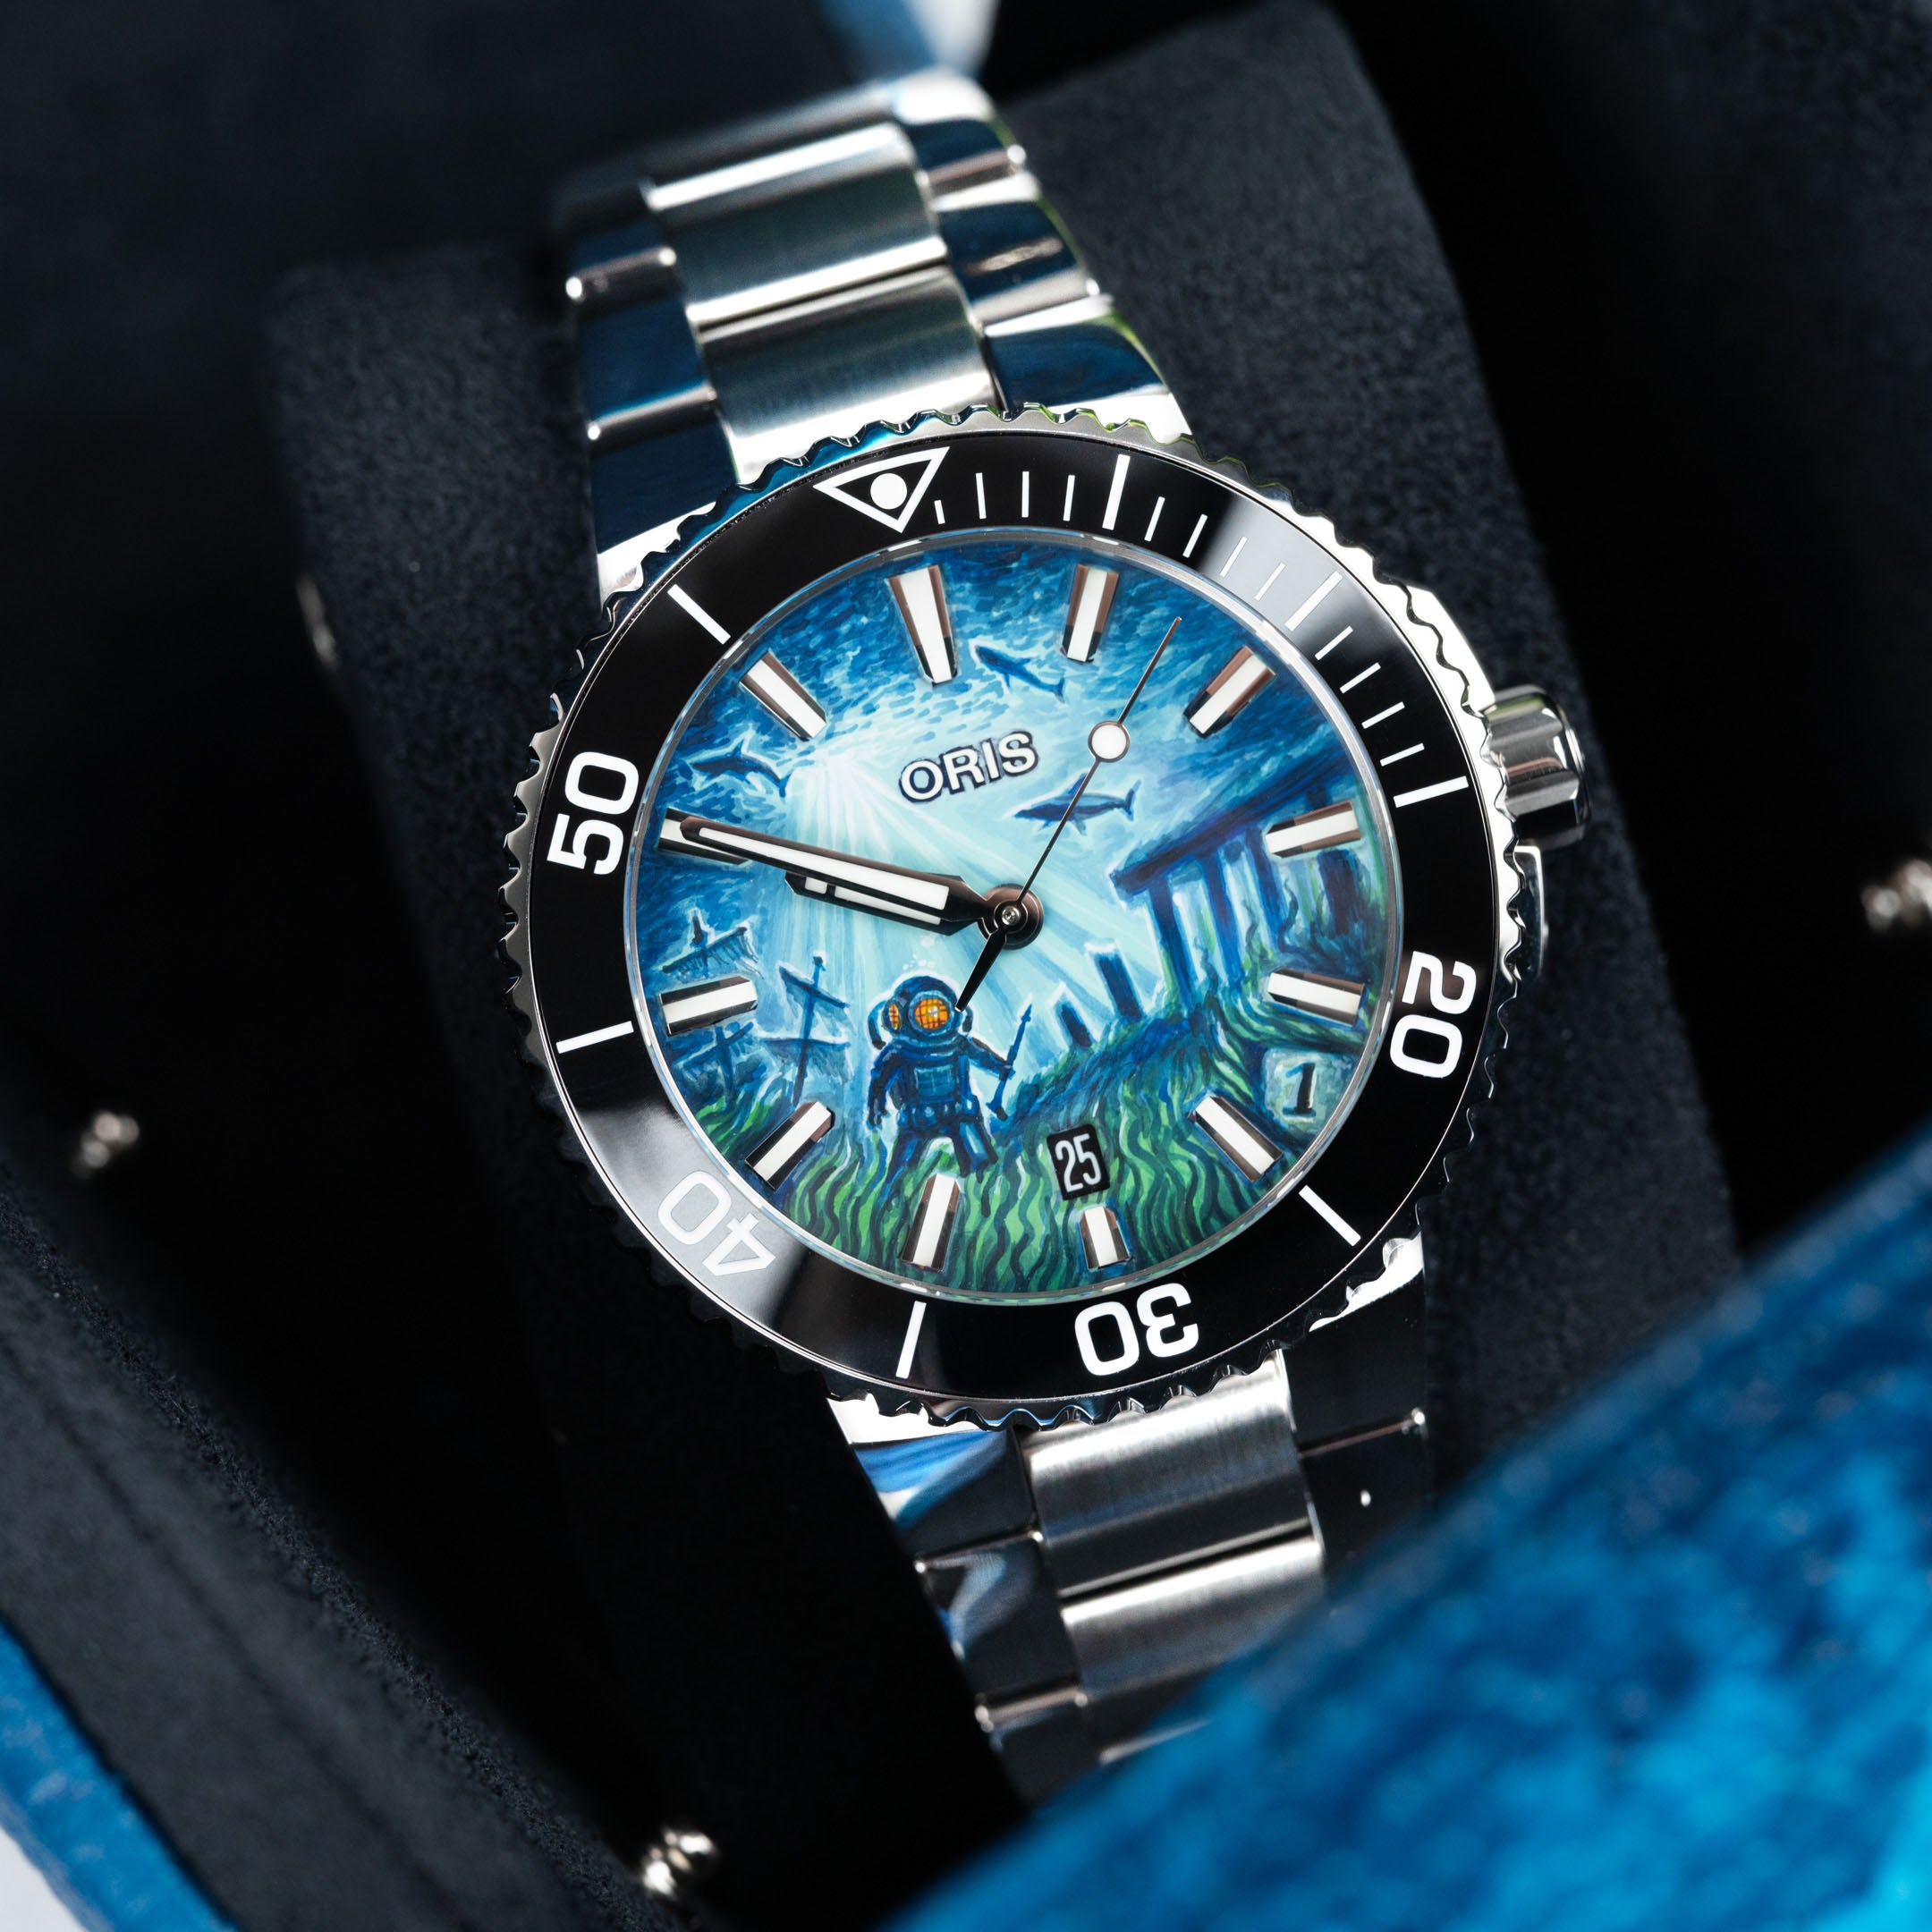 Elegant Oris Aquis Atlantis dive watch limited to 50 pieces worldwide, blending horology with oceanic exploration